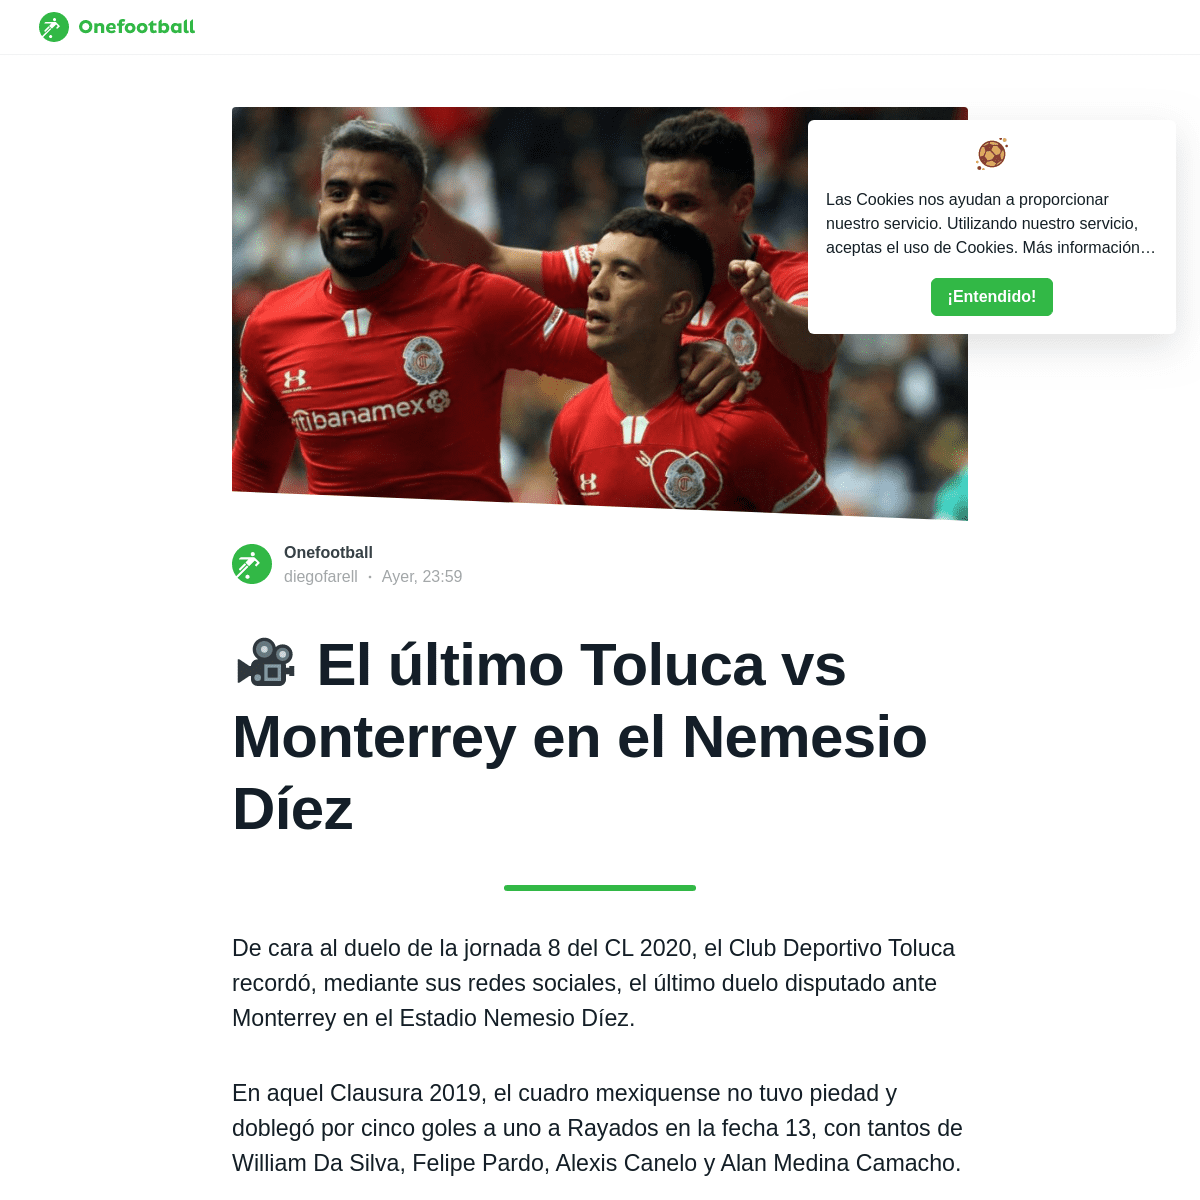 A complete backup of es.onefootball.com/%F0%9F%8E%A5-el-ultimo-toluca-vs-monterrey-en-el-nemesio-diez/